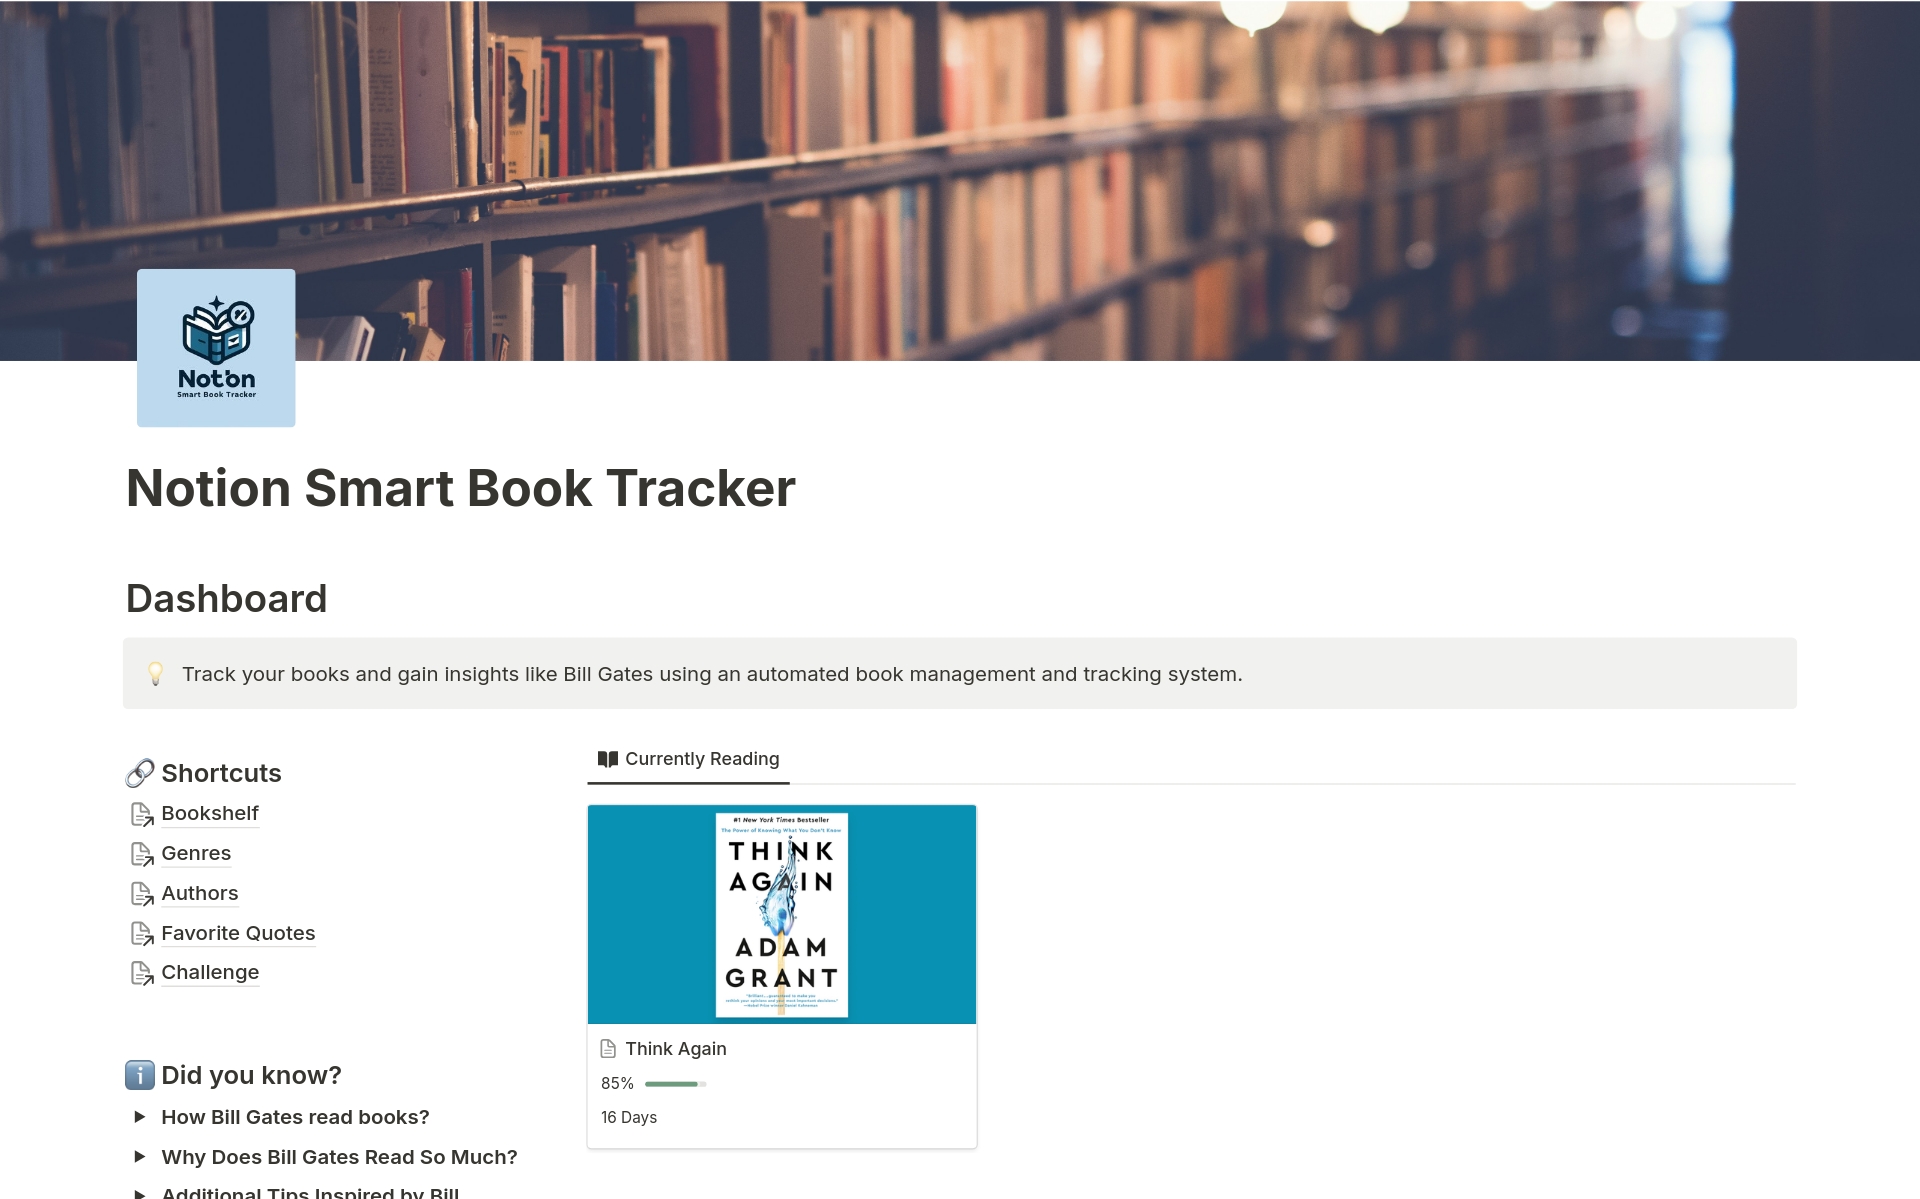 Vista previa de plantilla para Smart Book Tracker